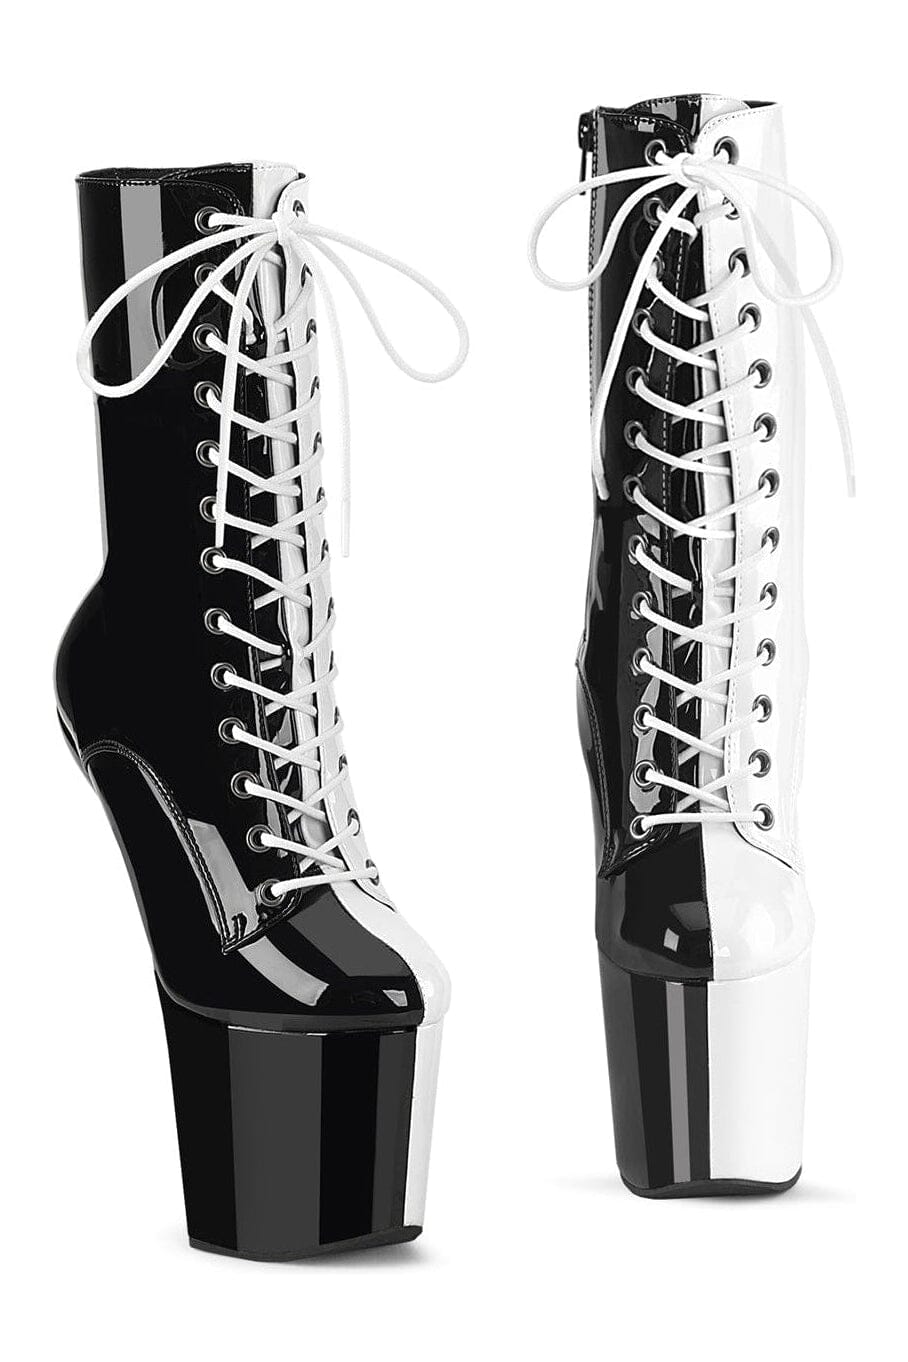 CRAZE-1040TT Black Patent Ankle Boot-Ankle Boots-Pleaser-Black-10-Patent-SEXYSHOES.COM